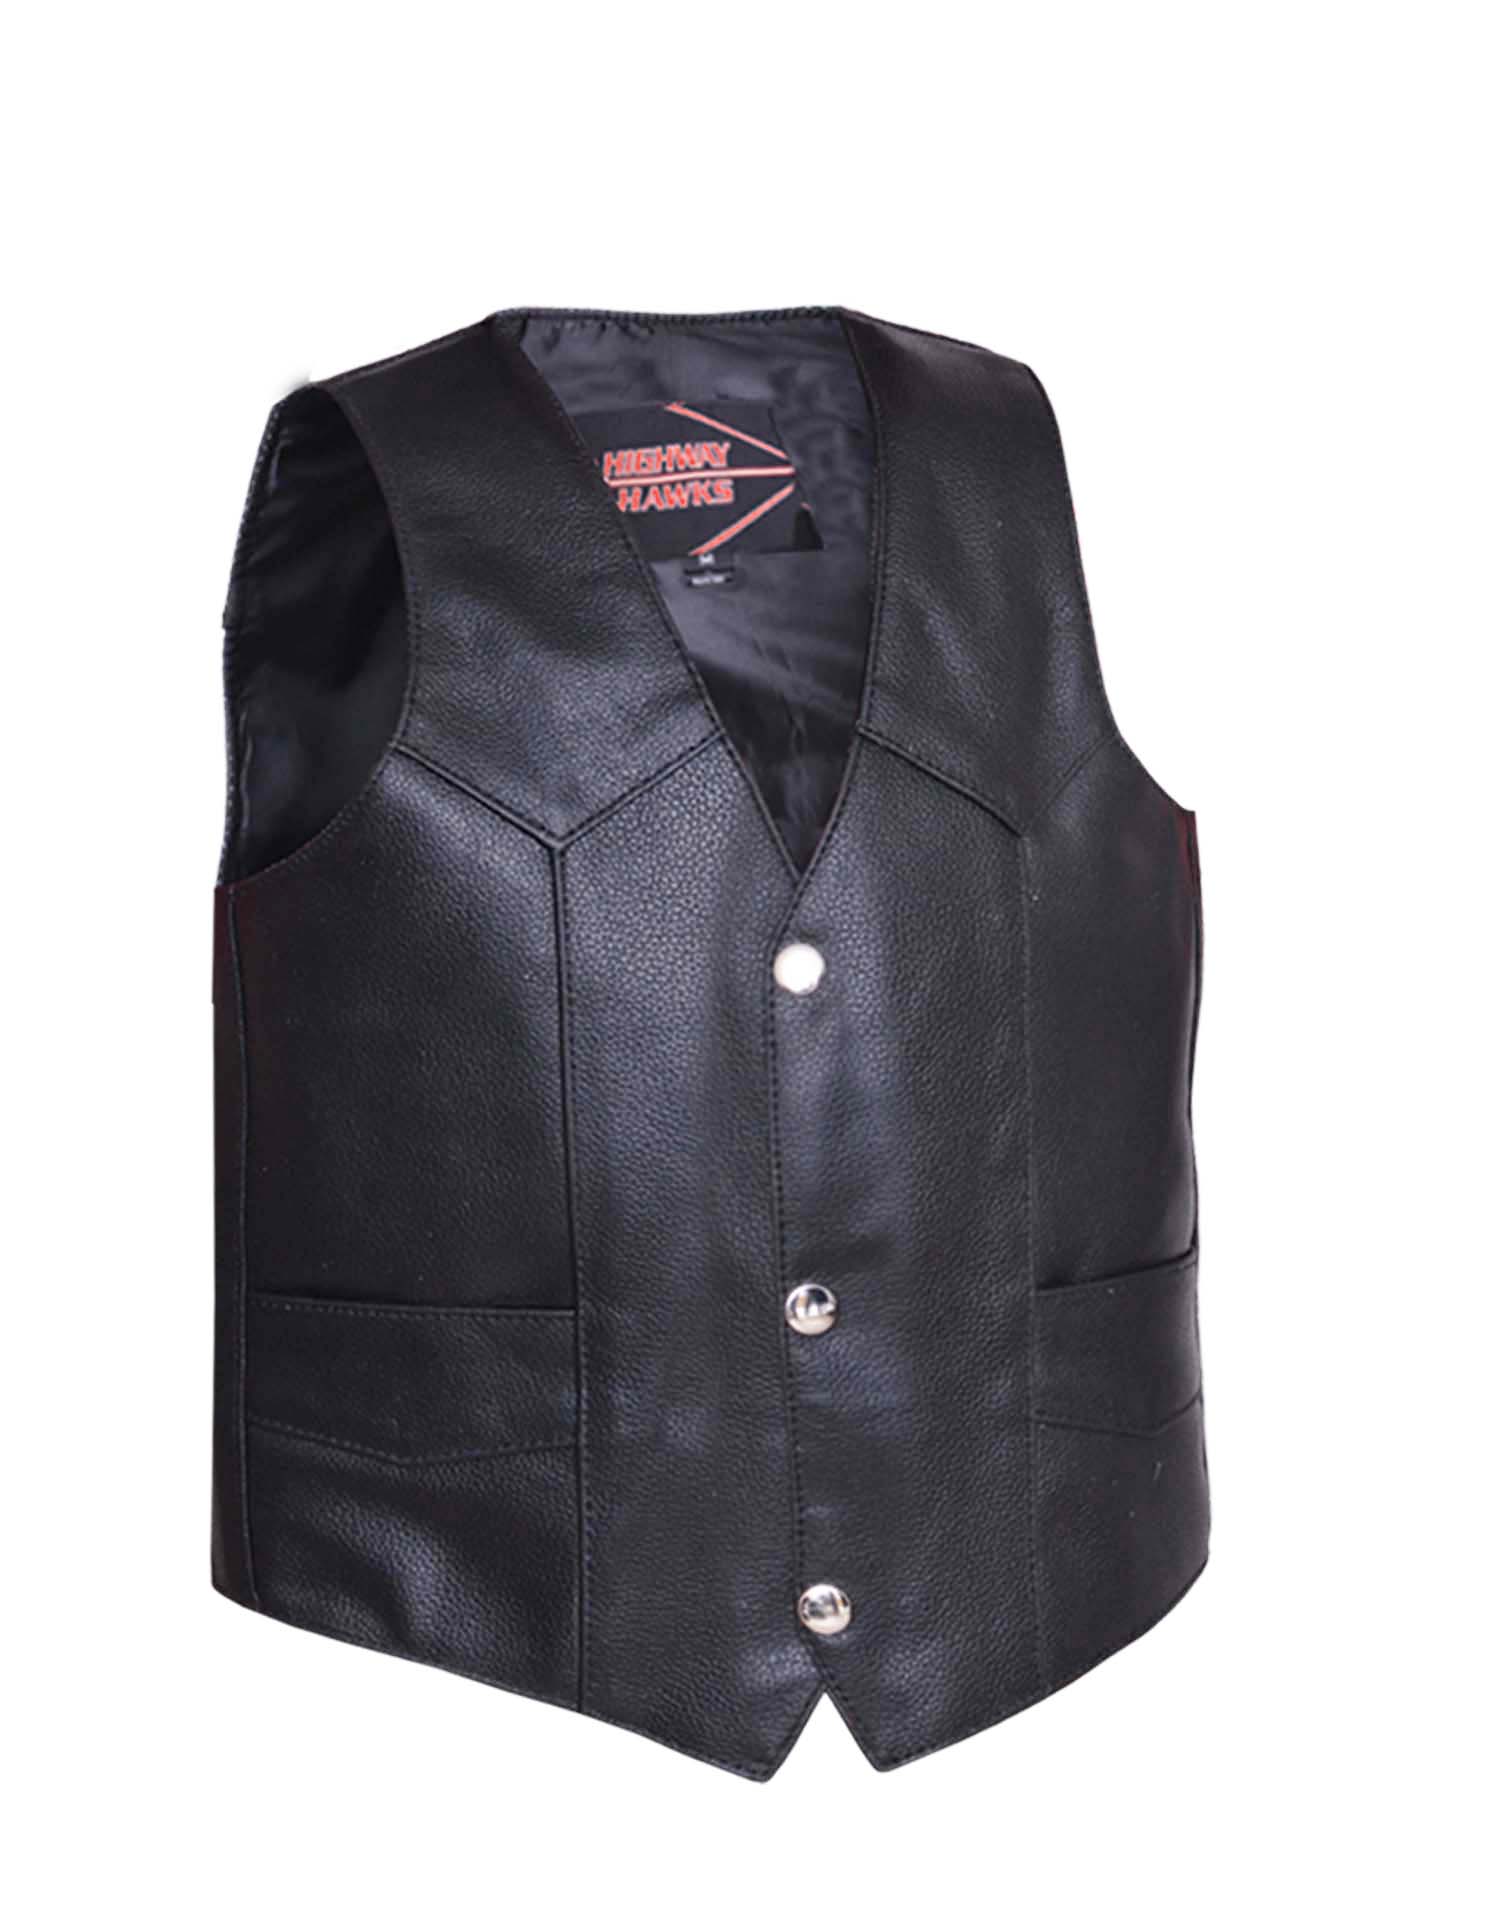 Kids Black Leather Vest (Size: X-Small)